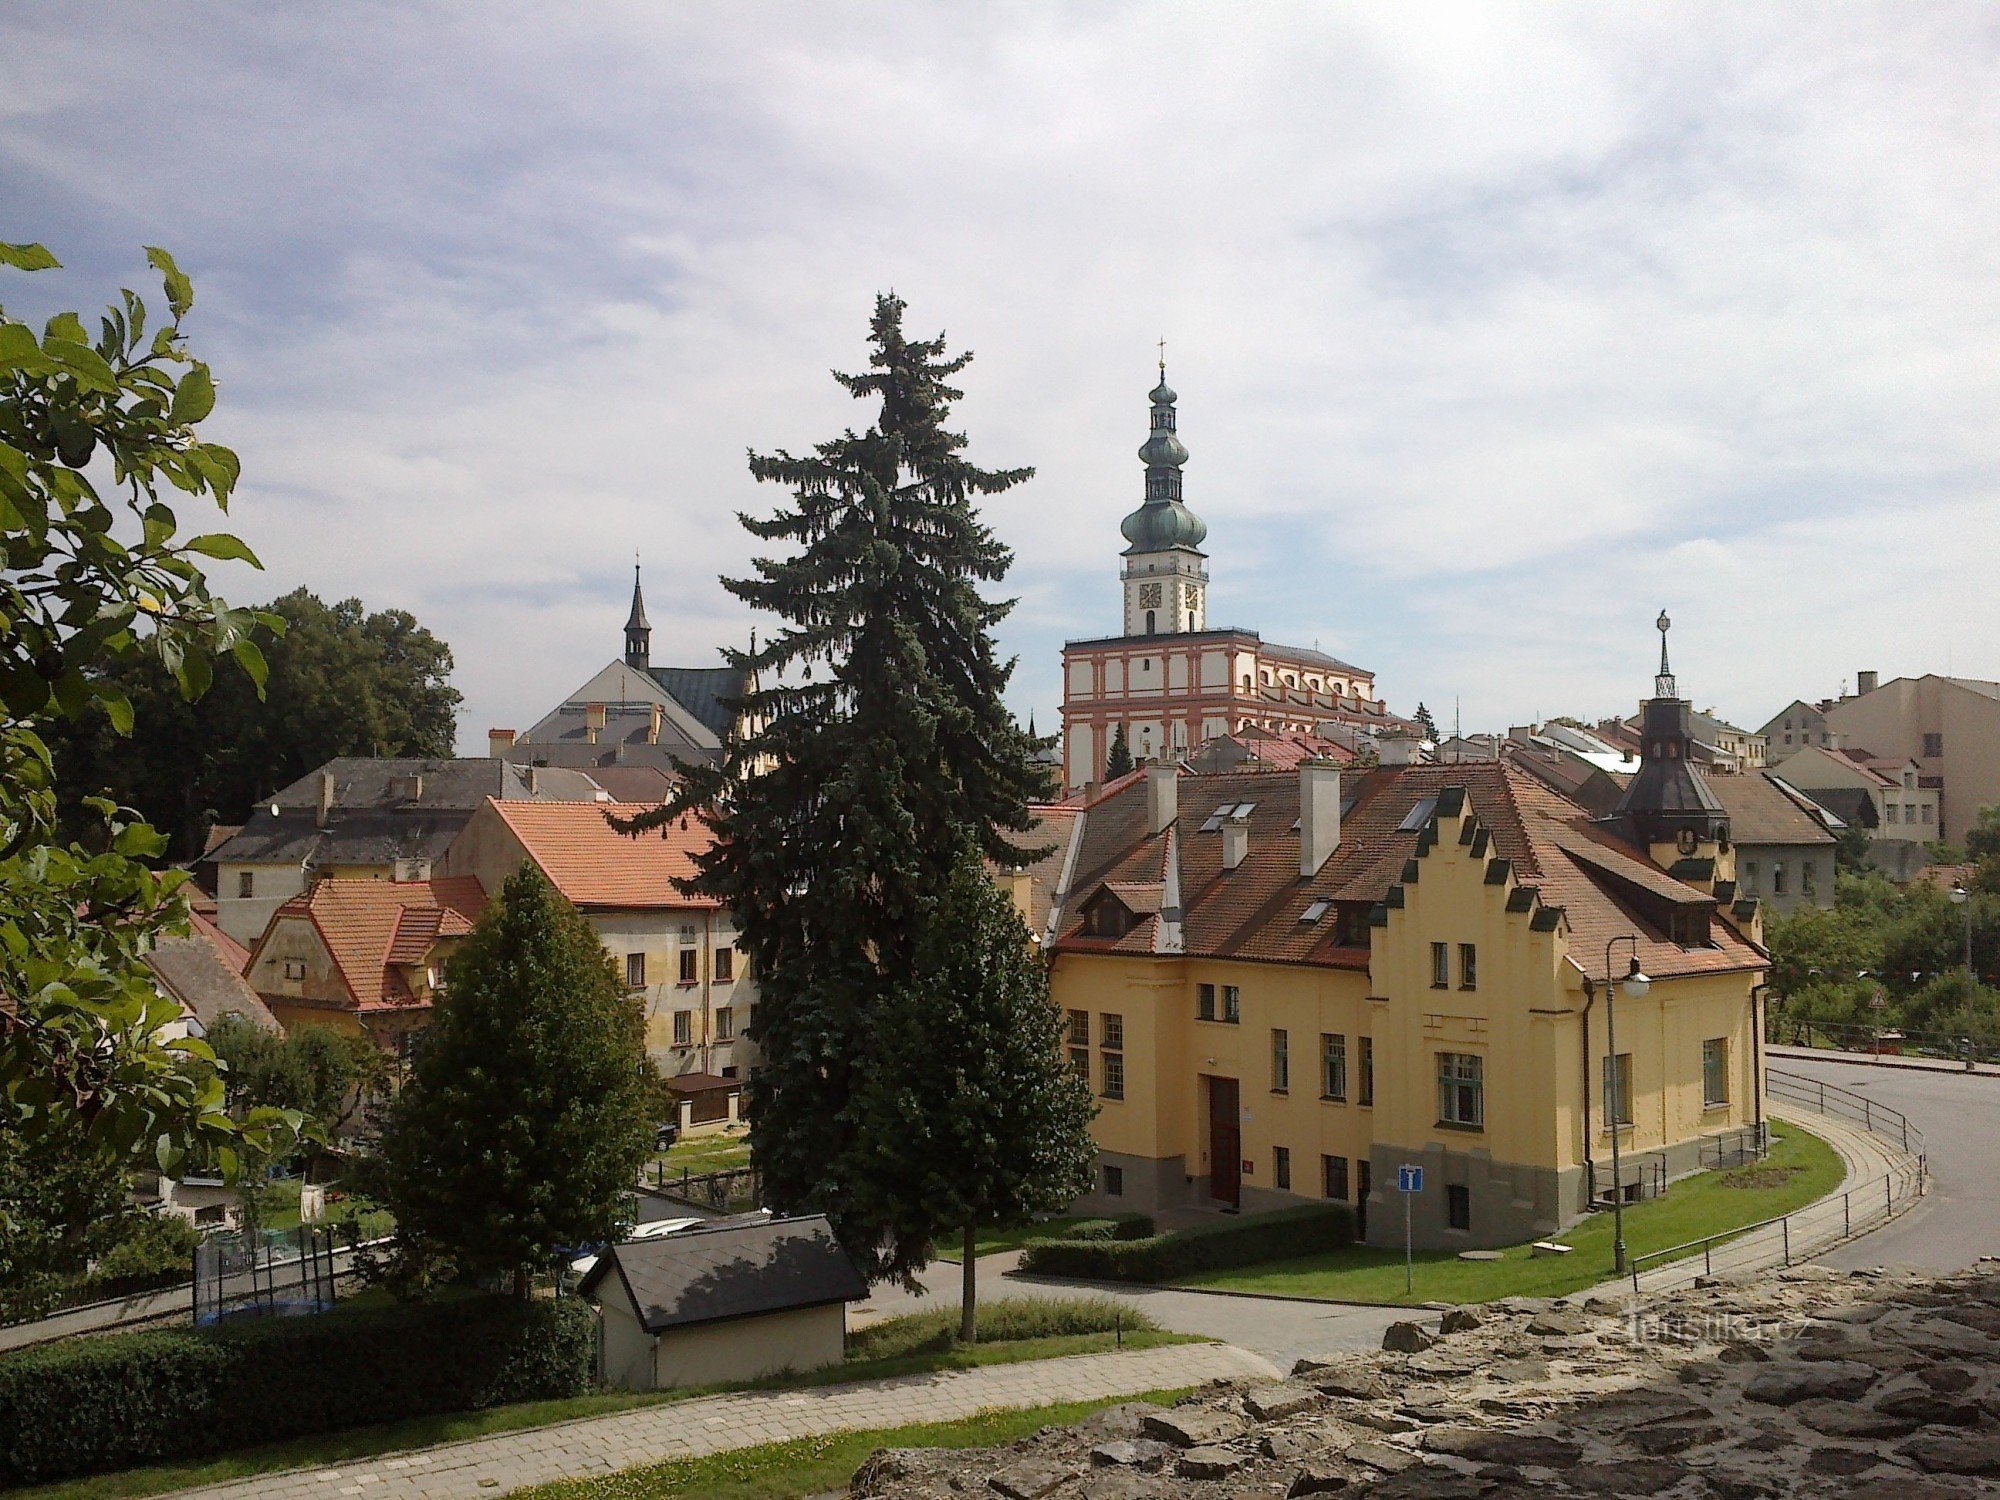 Polná - historiallinen kaupunki Vysočinassa.